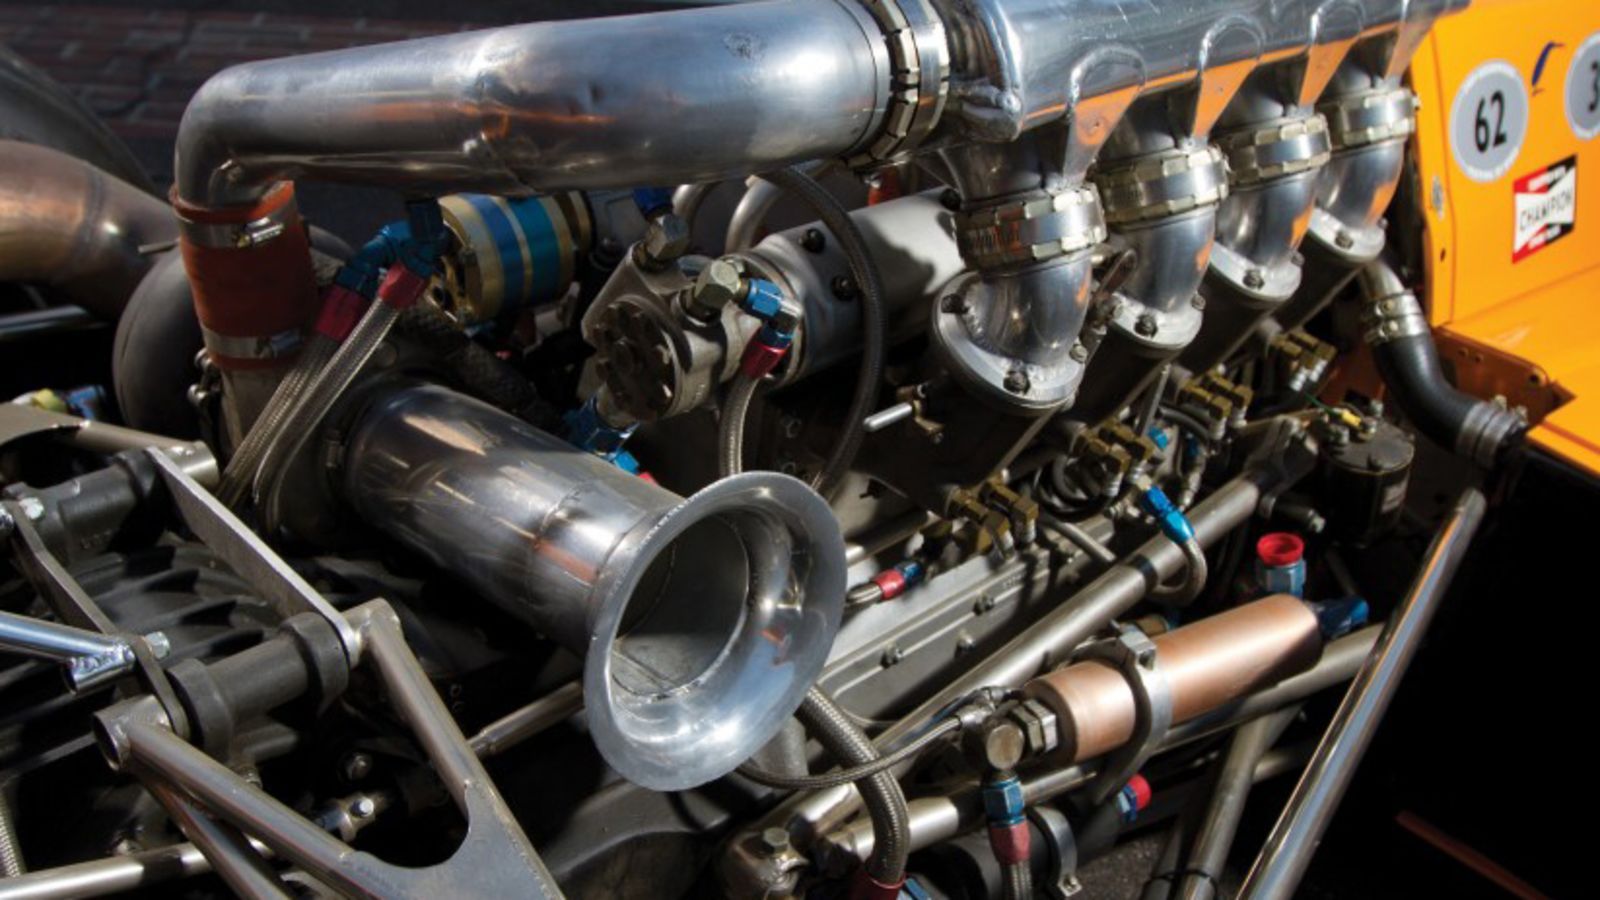 Toyota midget race car engines